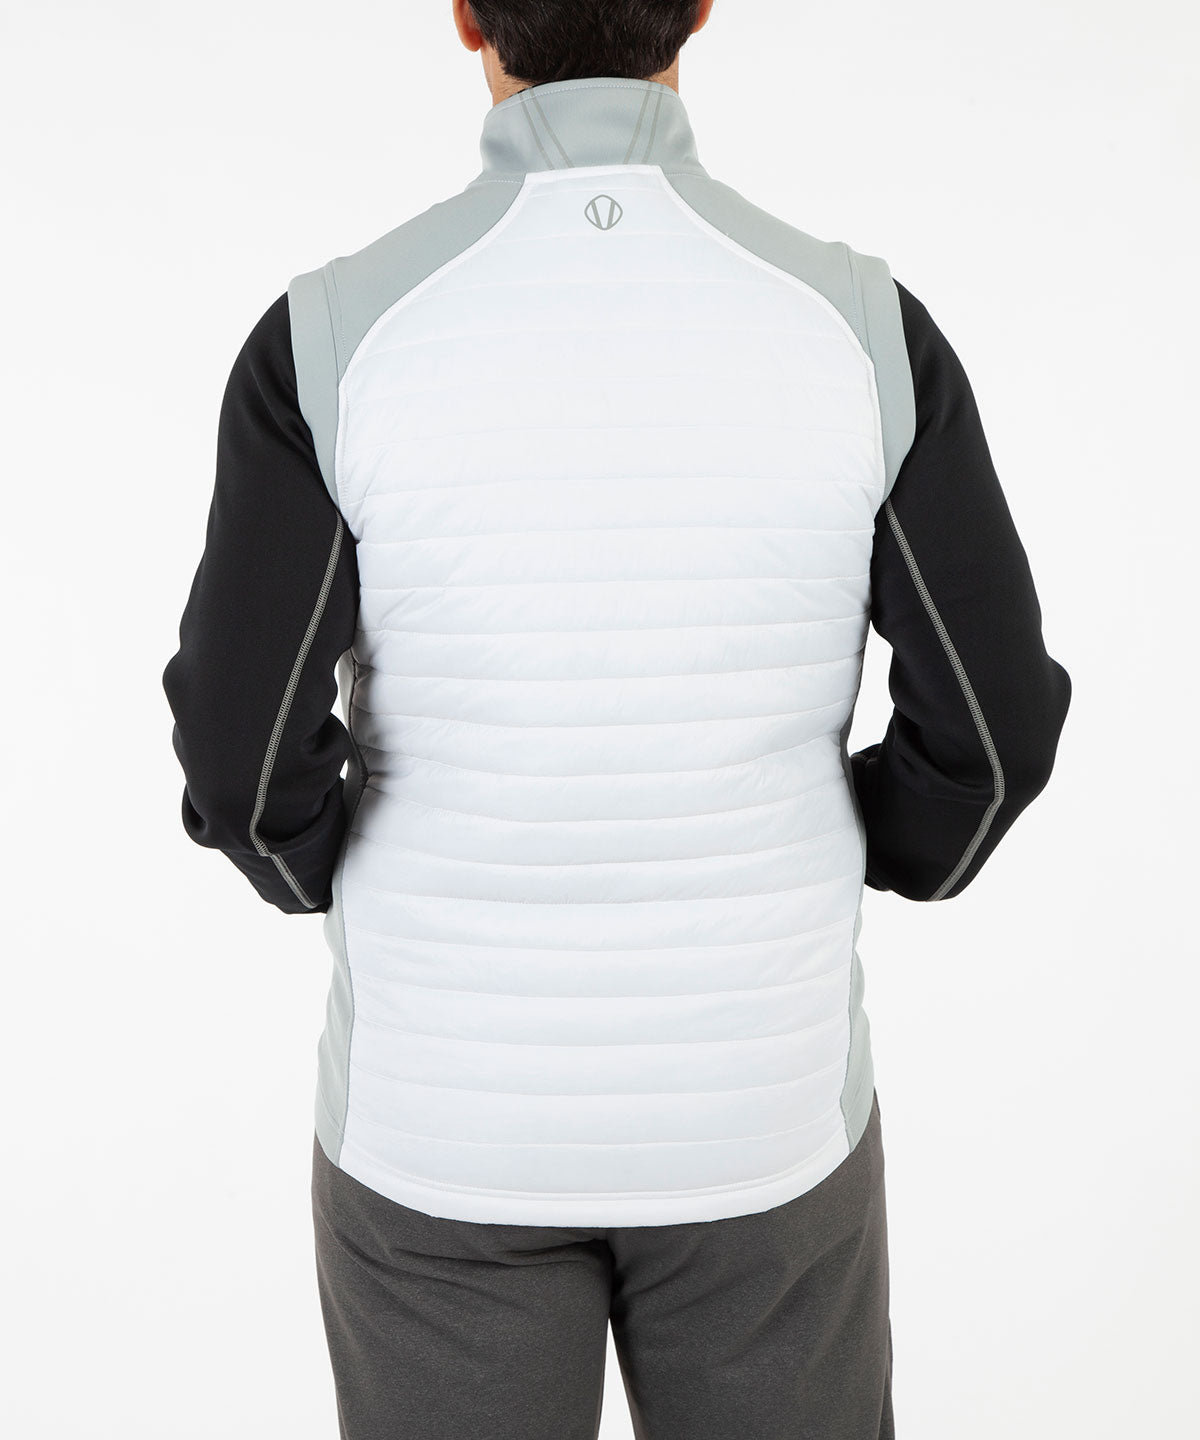 123rd U.S. Open Sunice Men's Hamilton Thermal Hybrid Vest